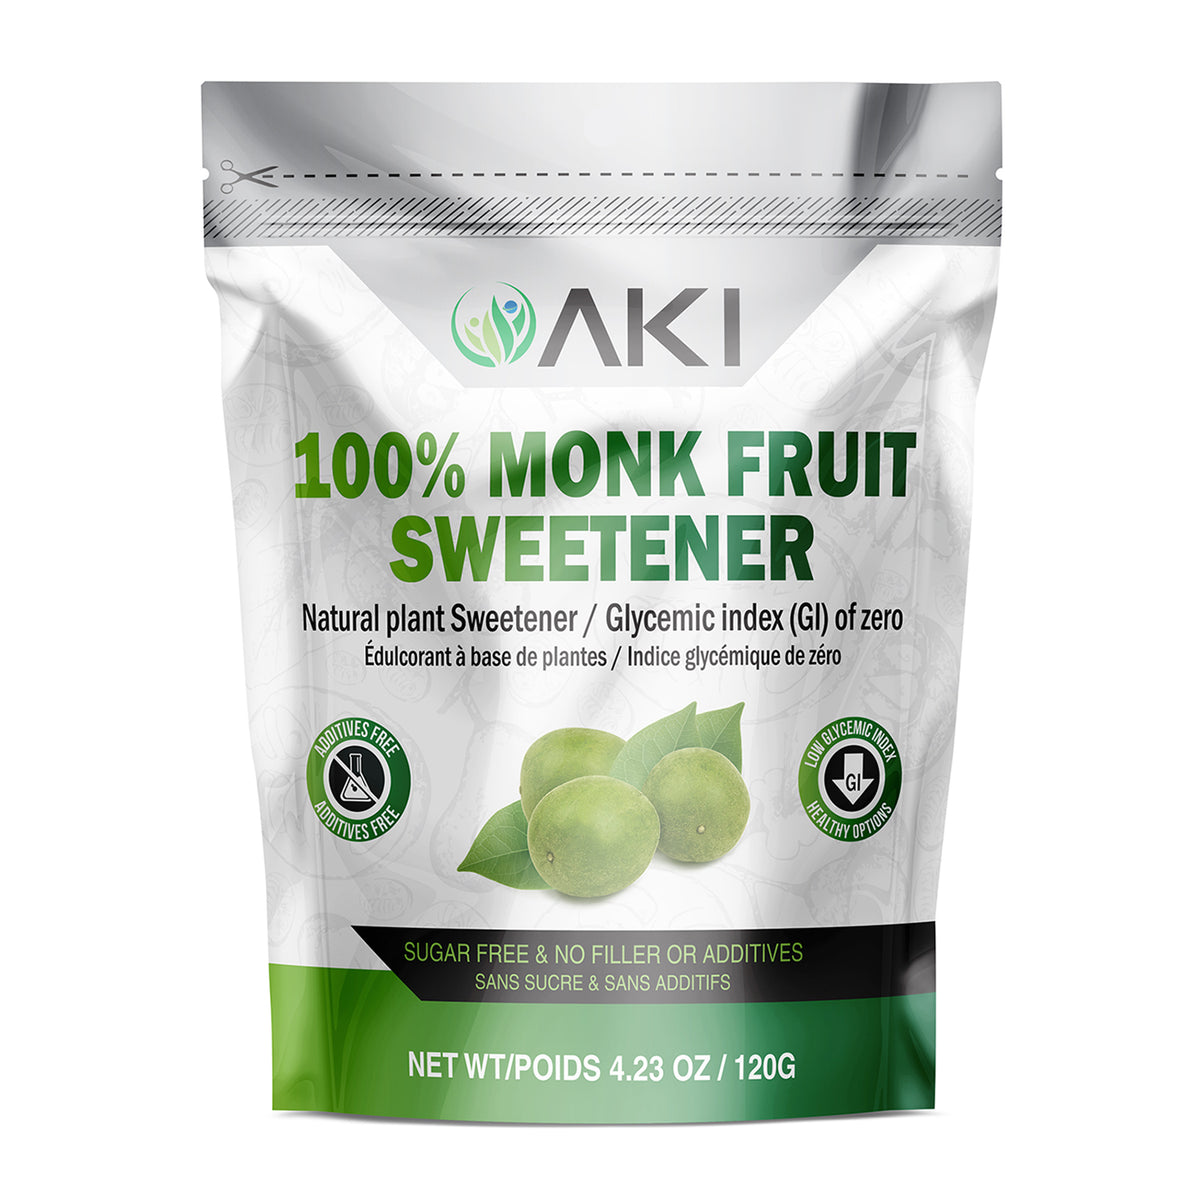 Suagar free sprinkles 🎄I use Erythritol Monkfruit sweetener - add ge